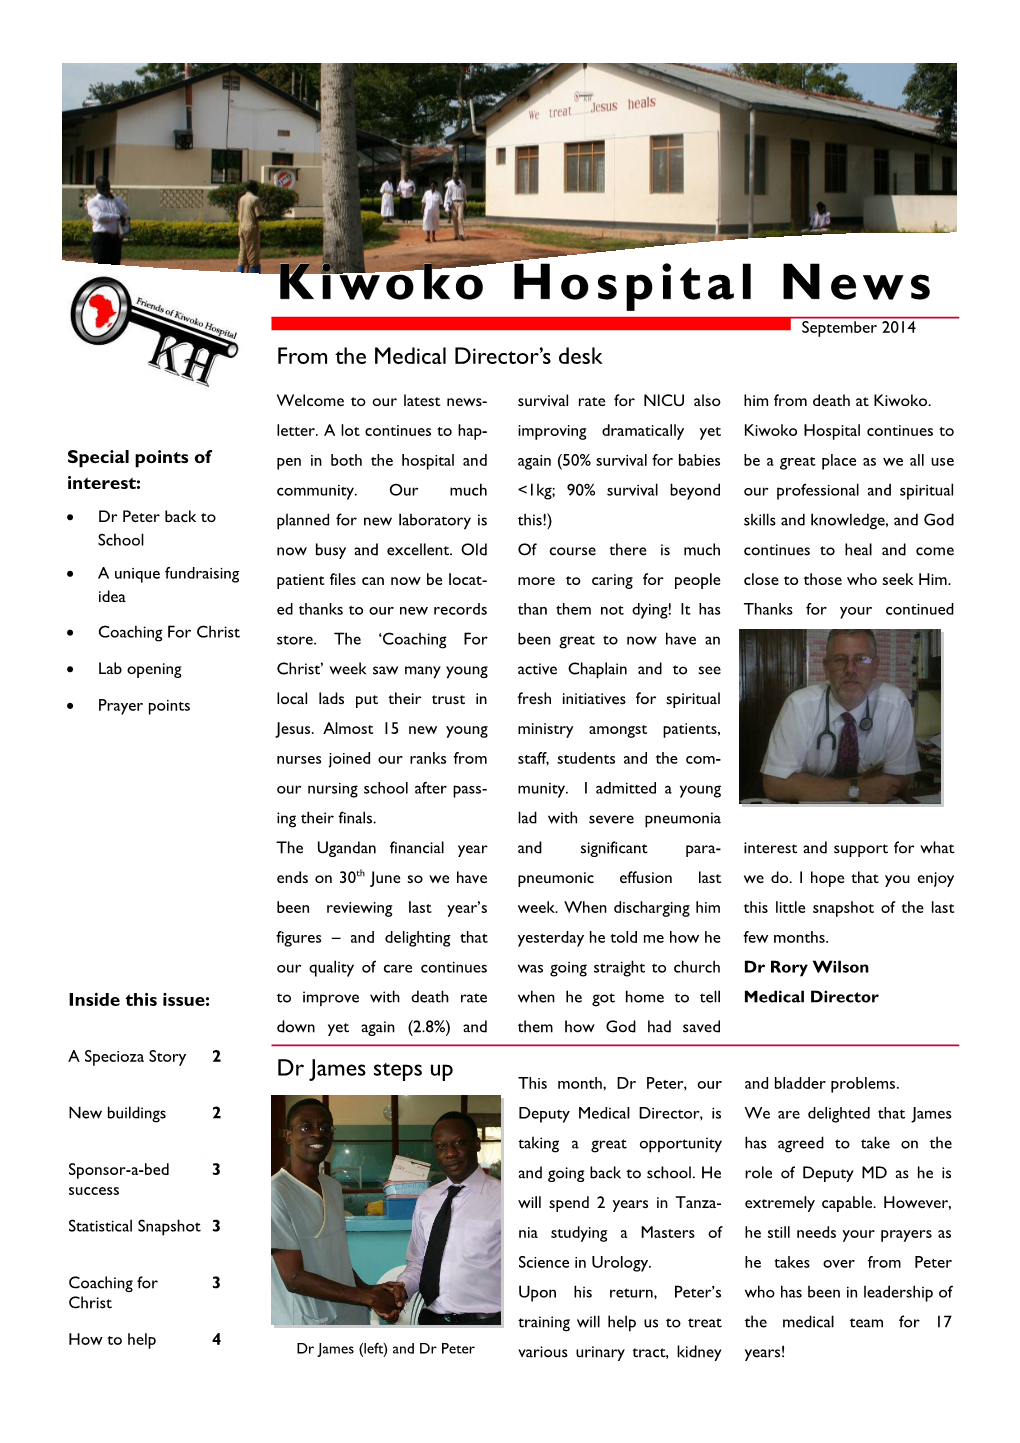 Kiwoko Hospital News September 2014 from the Medical Director’S Desk